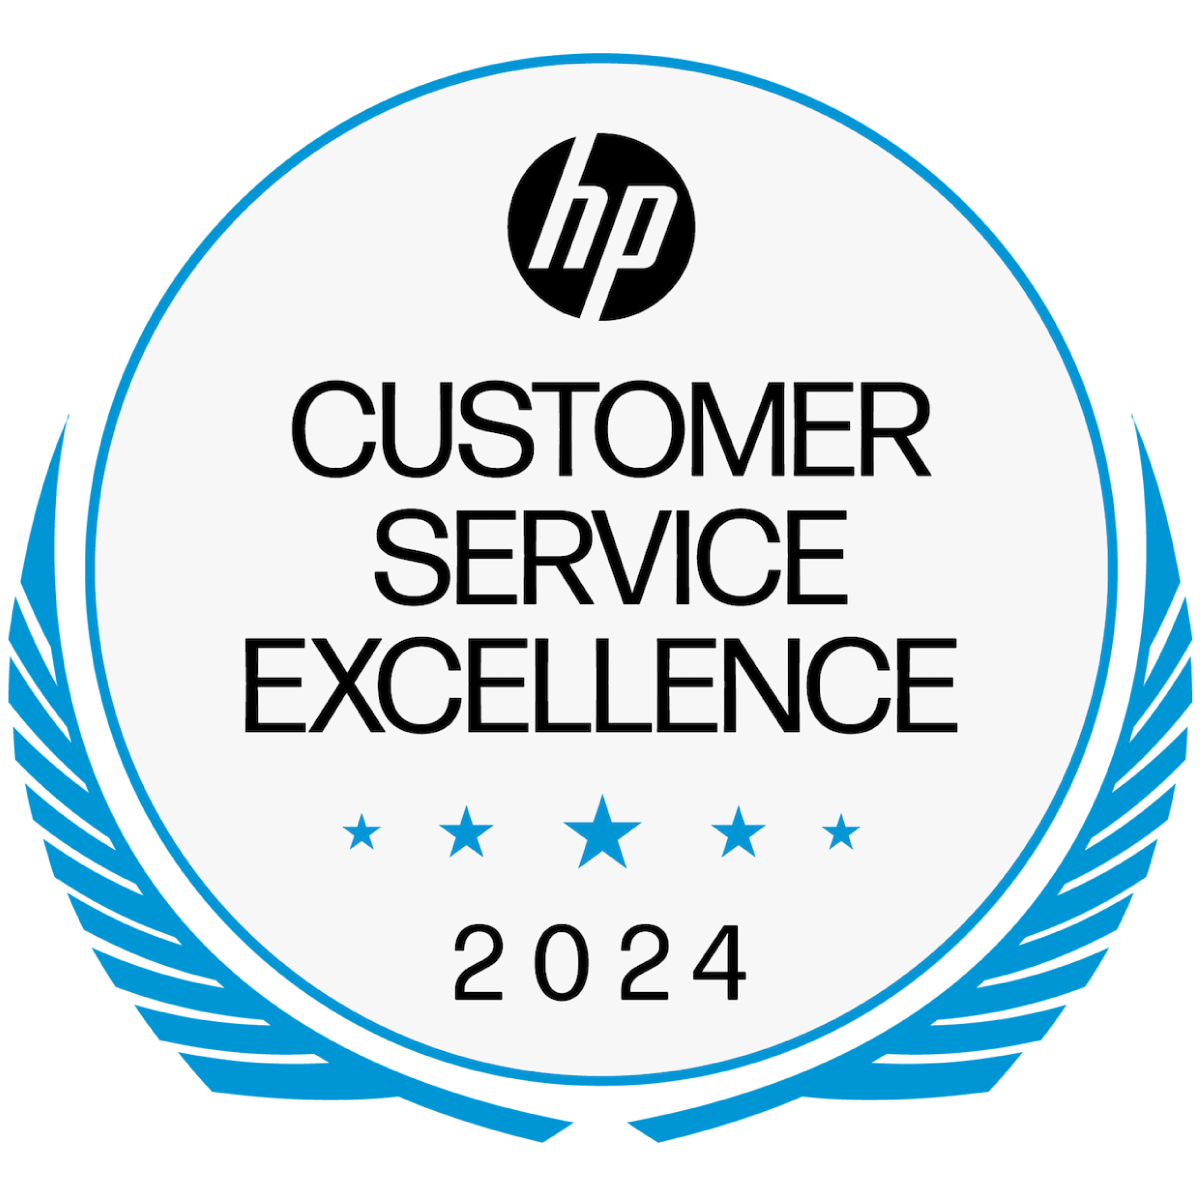 HP Customer Service Excellence 2024 Logo